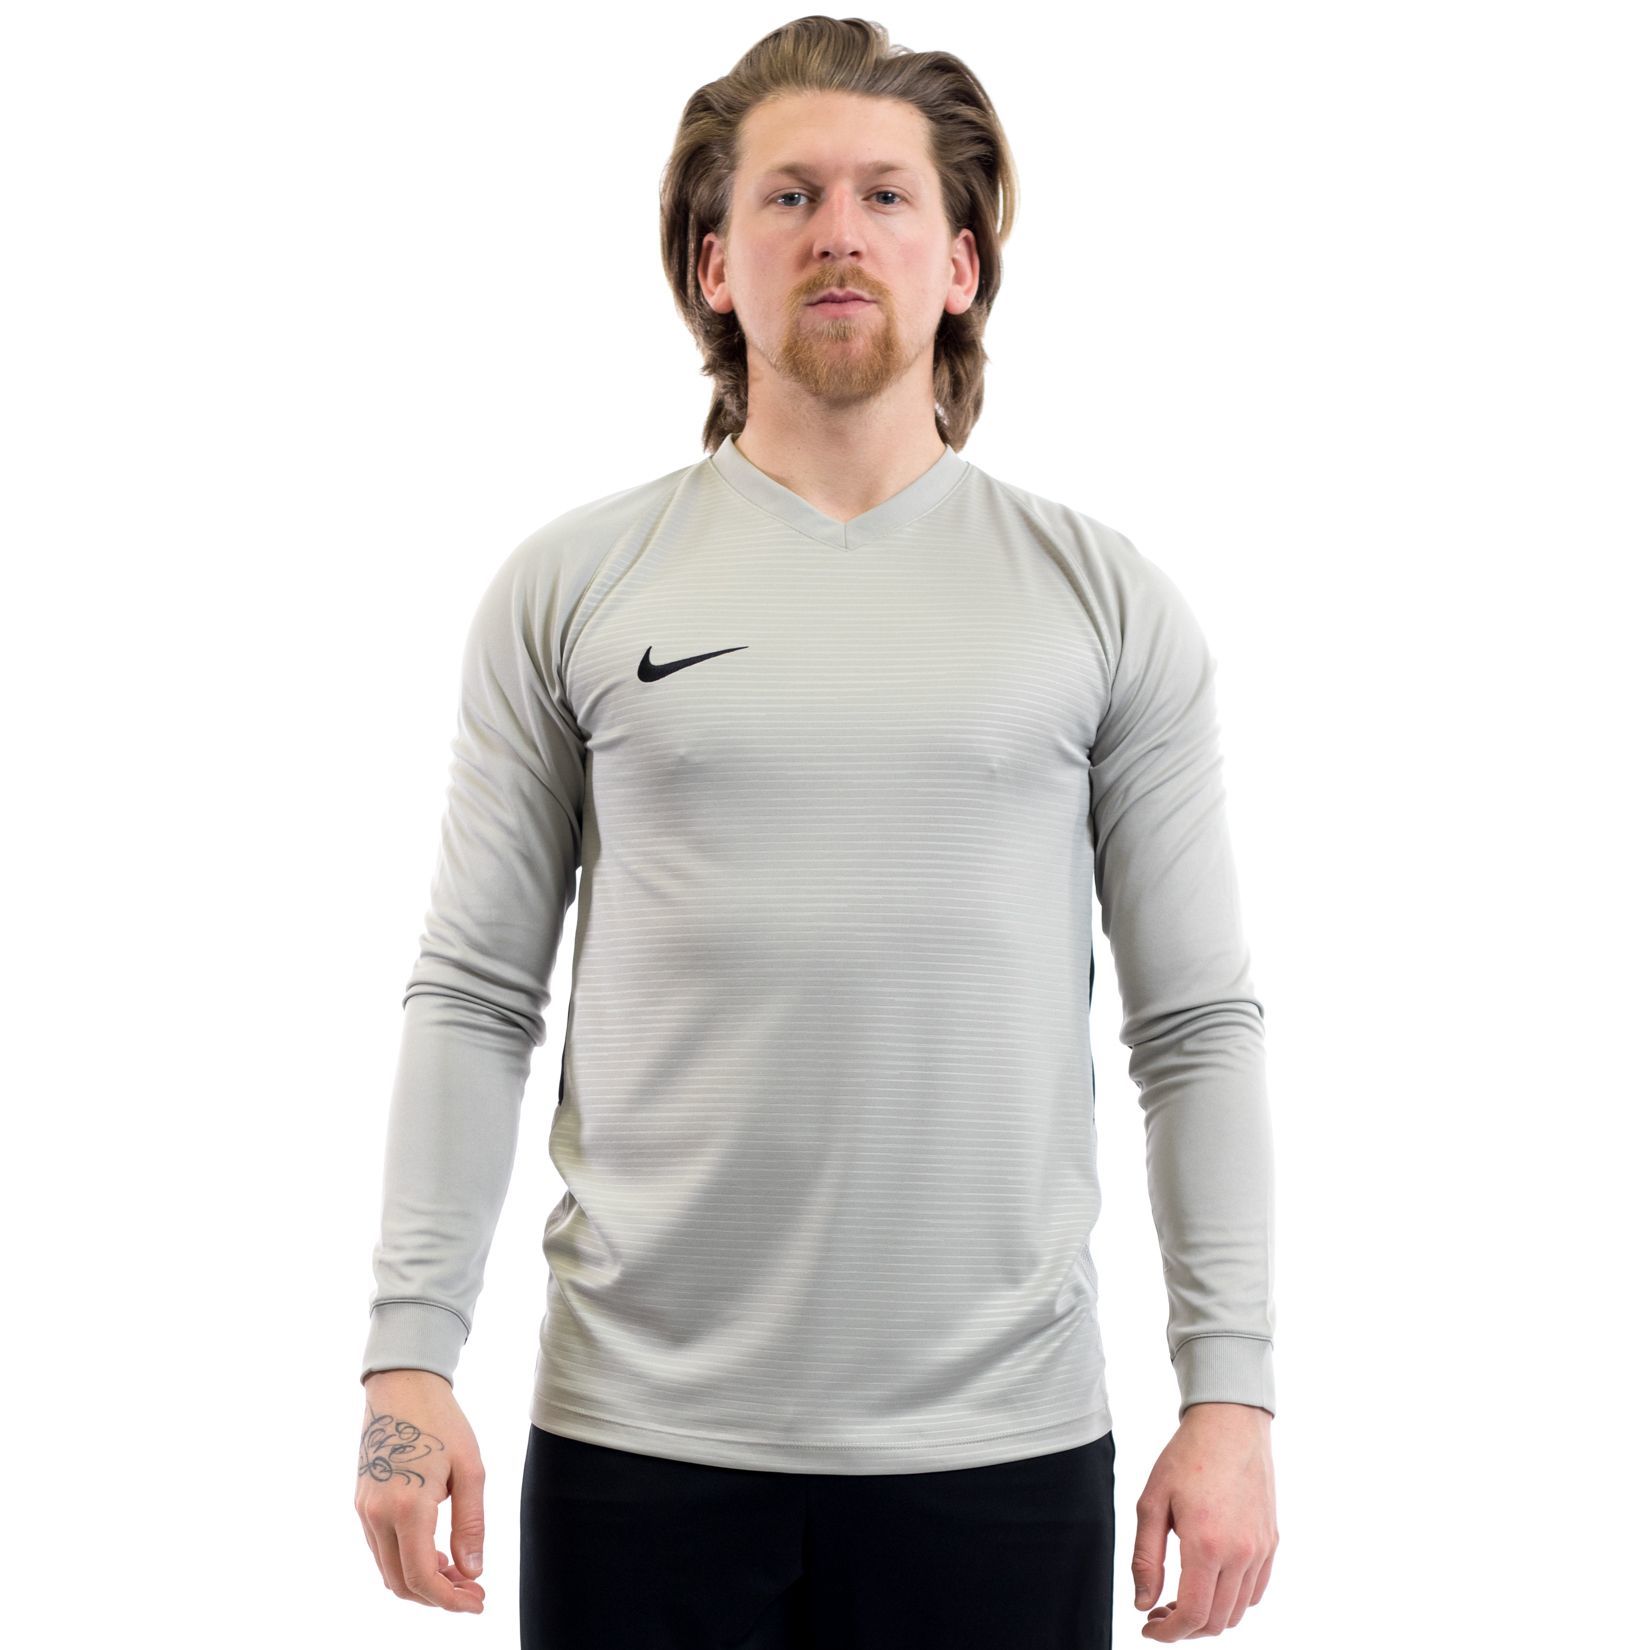 Nike Tiempo Premier Long Football Shirt - Kitlocker.com